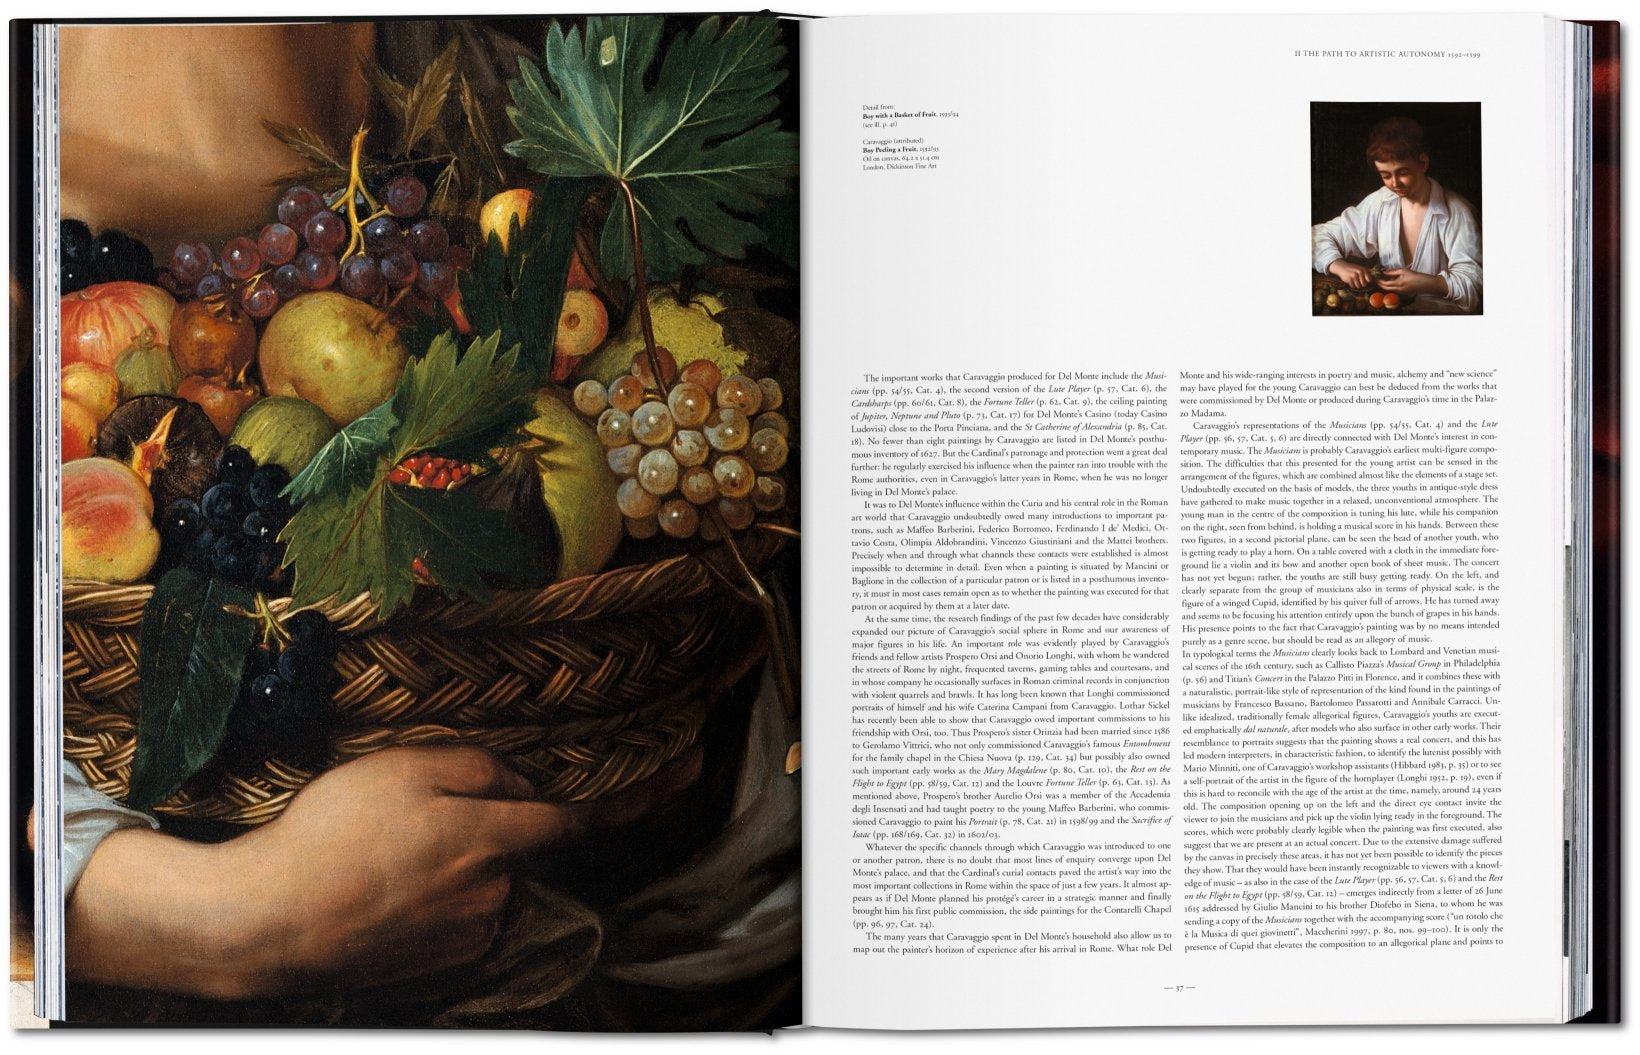 Caravaggio, The Complete Works